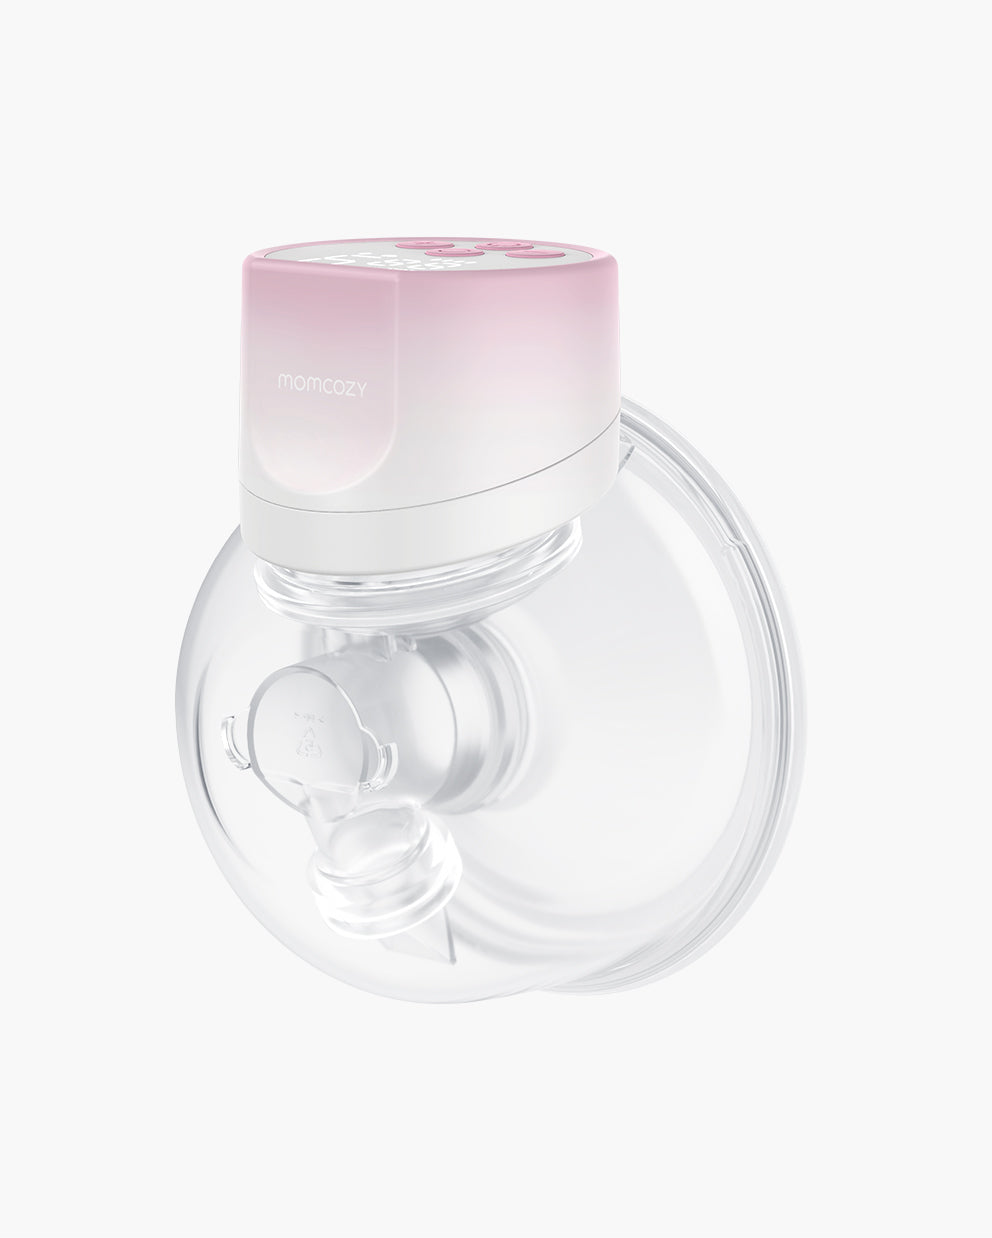 S12 Pro Wearable Breast Pump: Efficient & Quiet